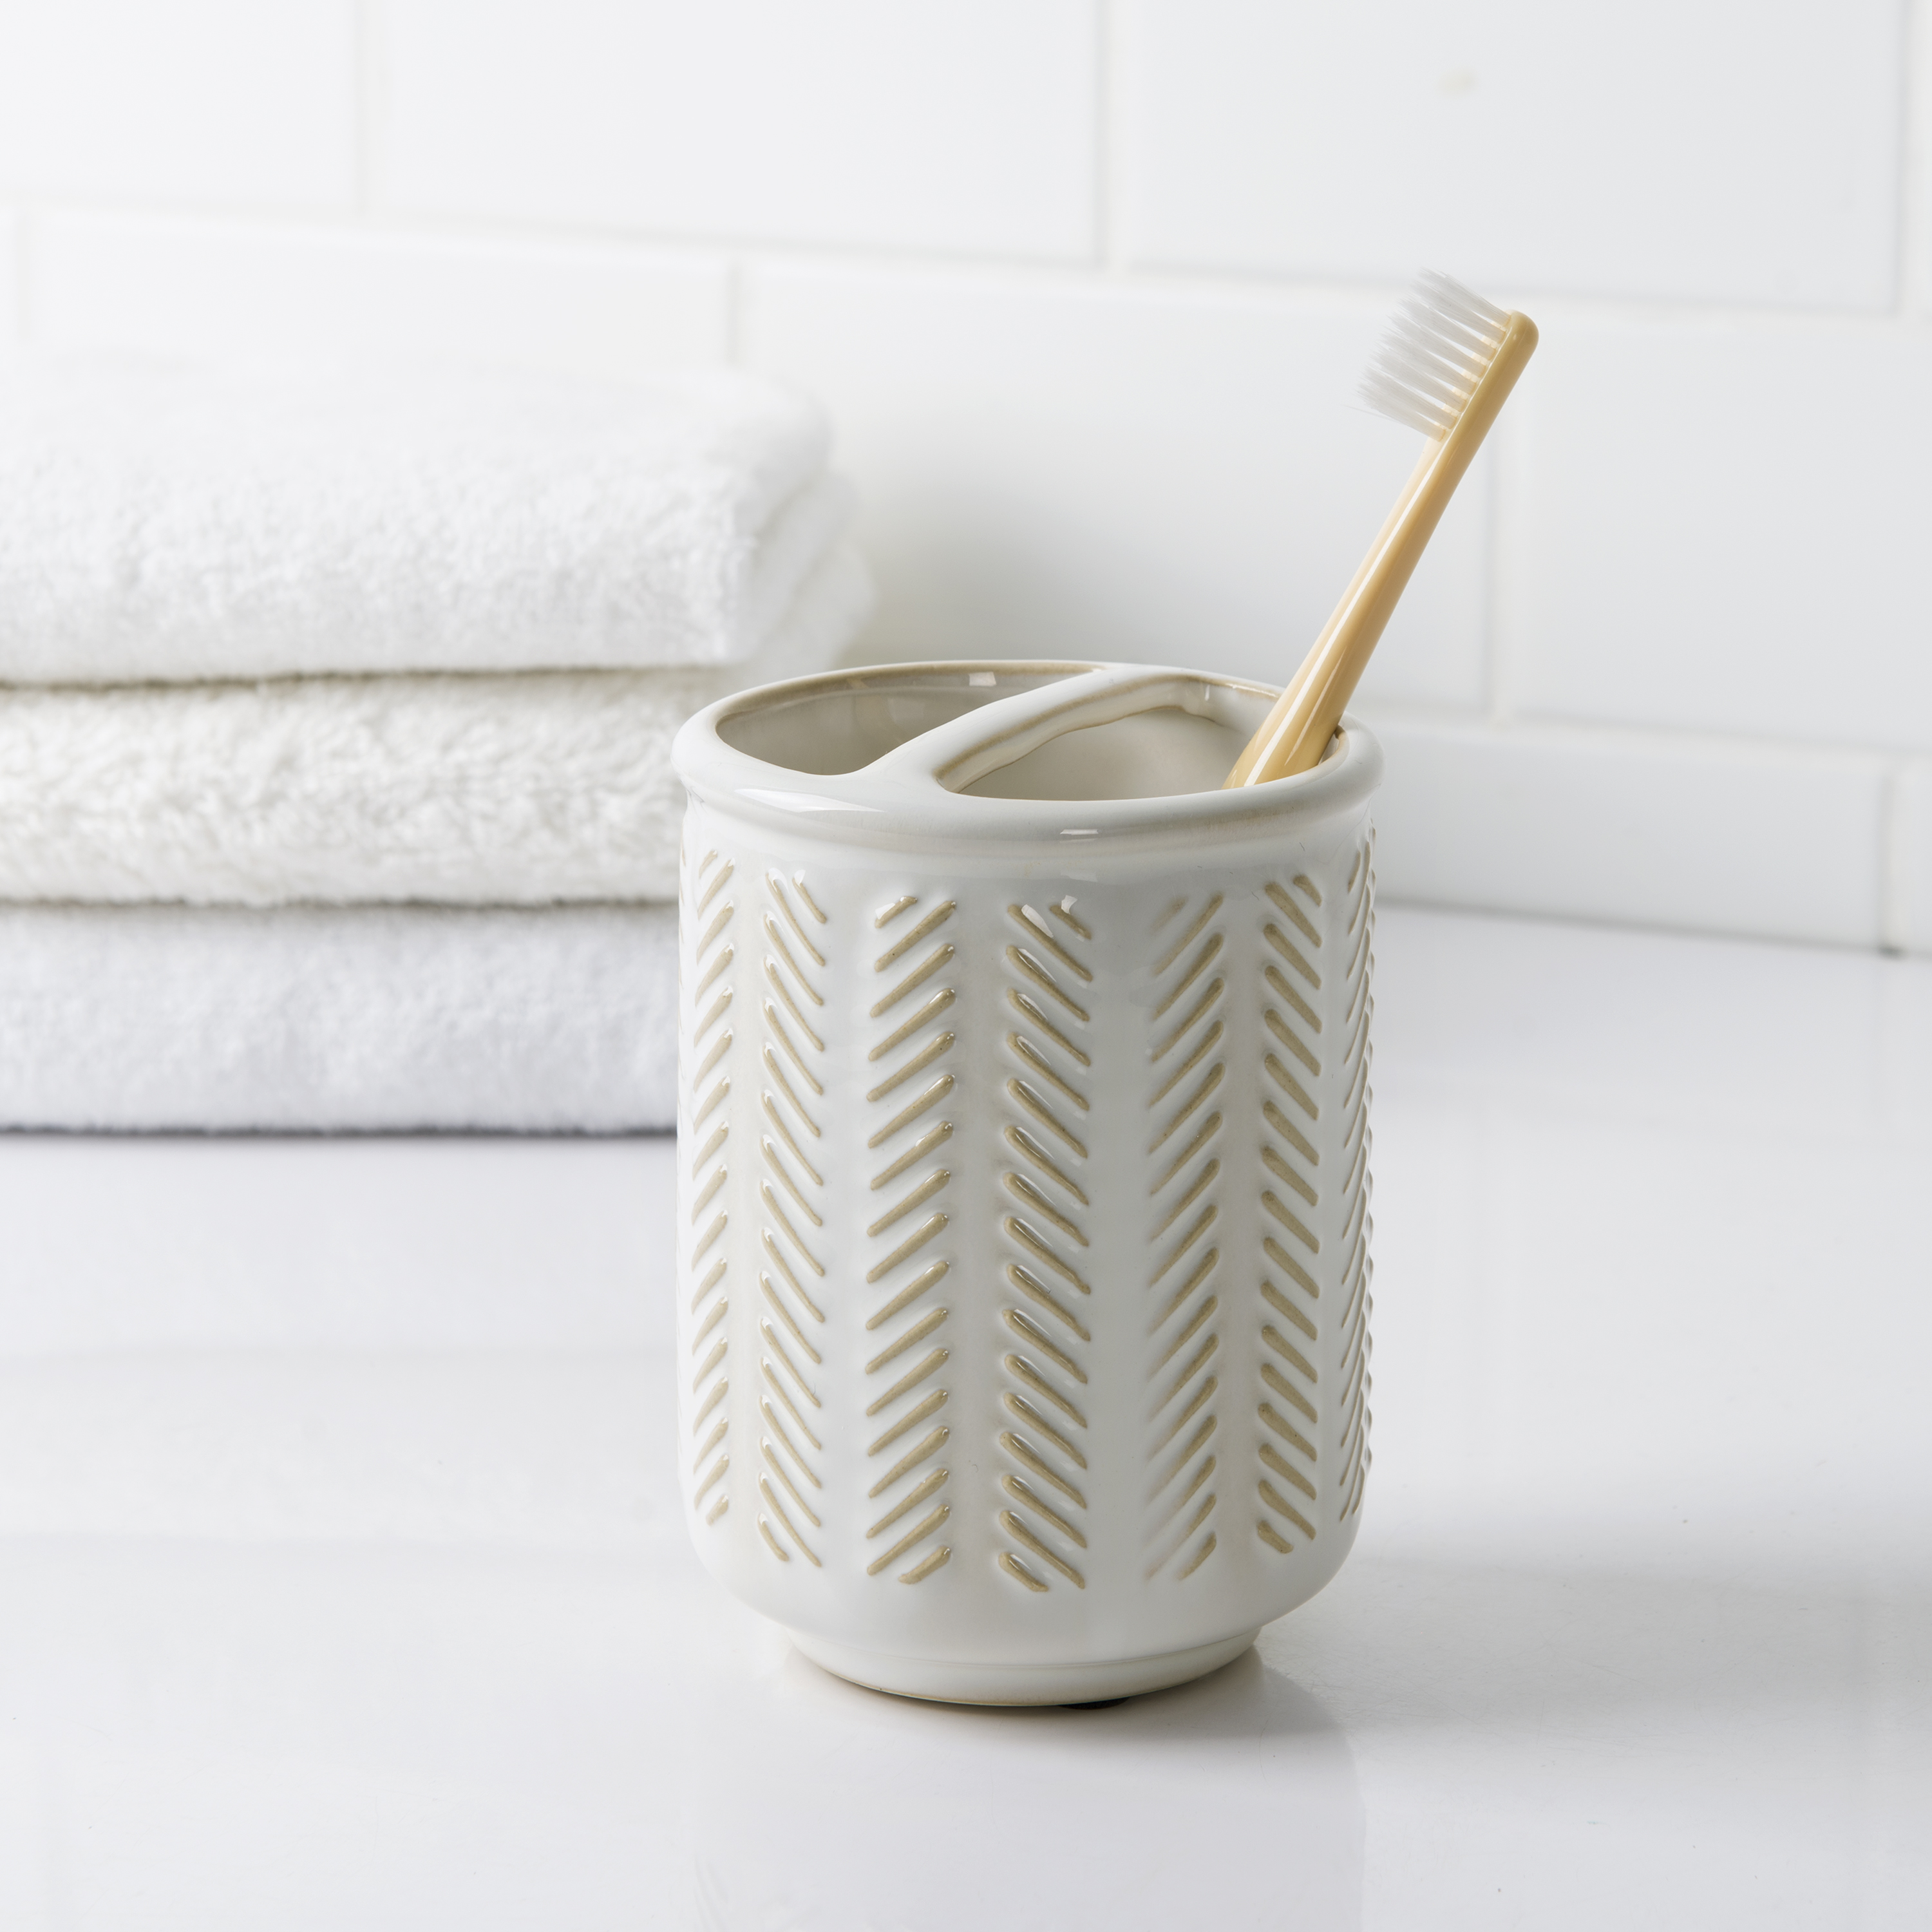 Better Homes & Gardens Reactive Glazed Textured Ceramic Toothbrush Holder in Creamy White - image 3 of 6